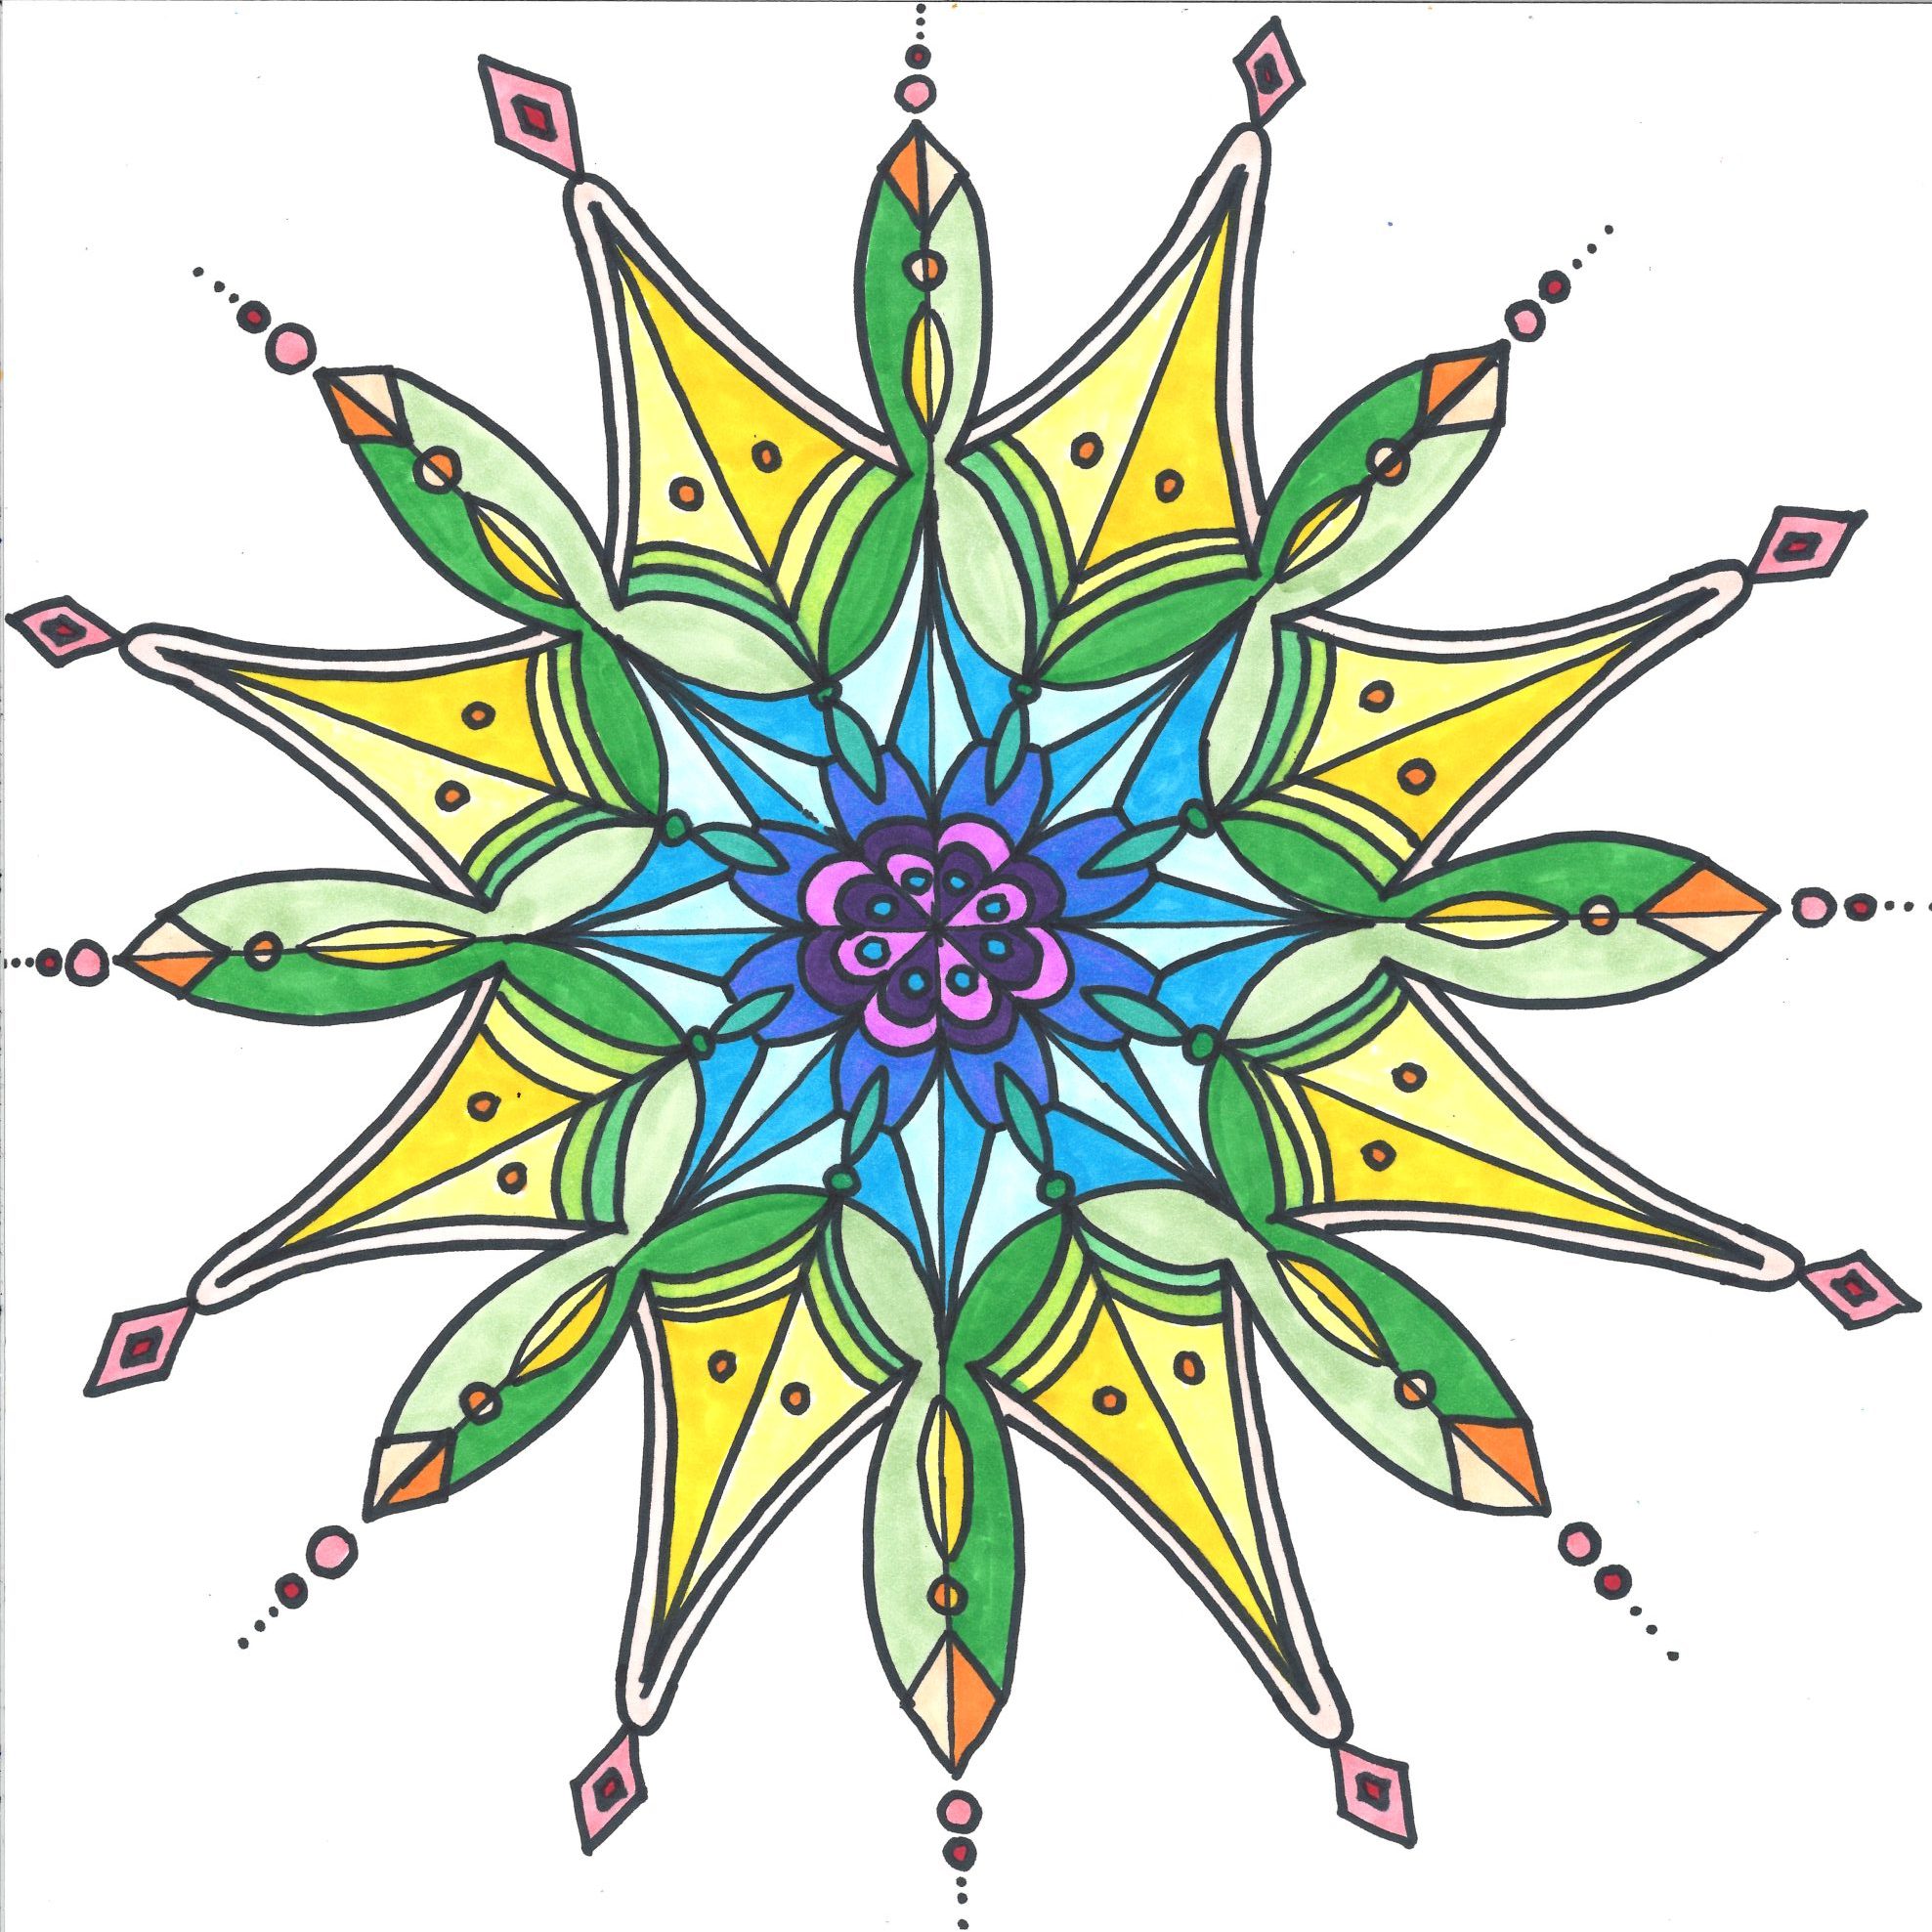 a colorful doodle of a mandala design